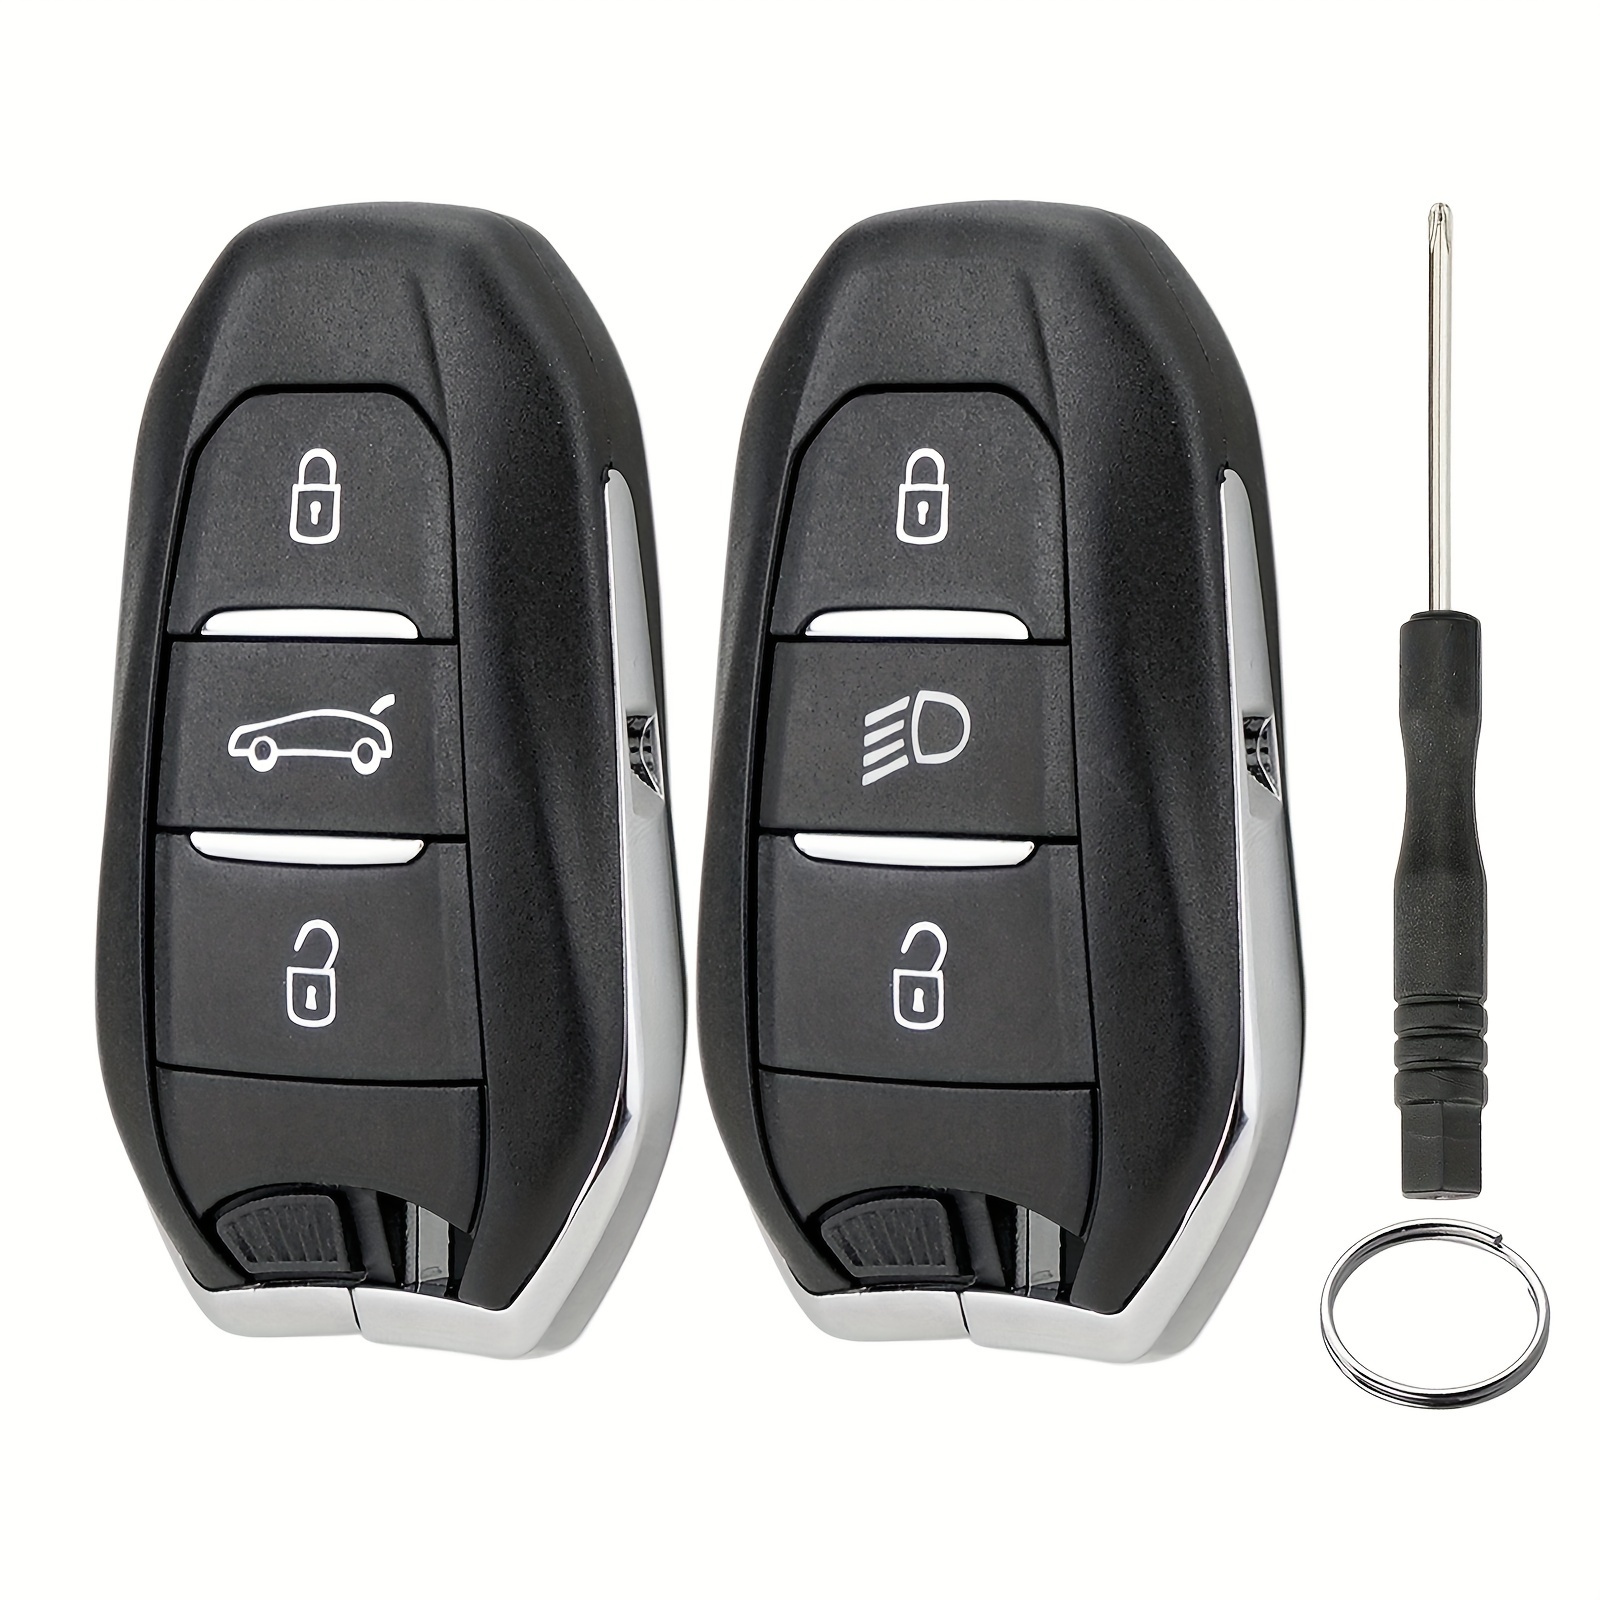  AMONIDA Smart Remote Car Key, Universal TK800+ LCD